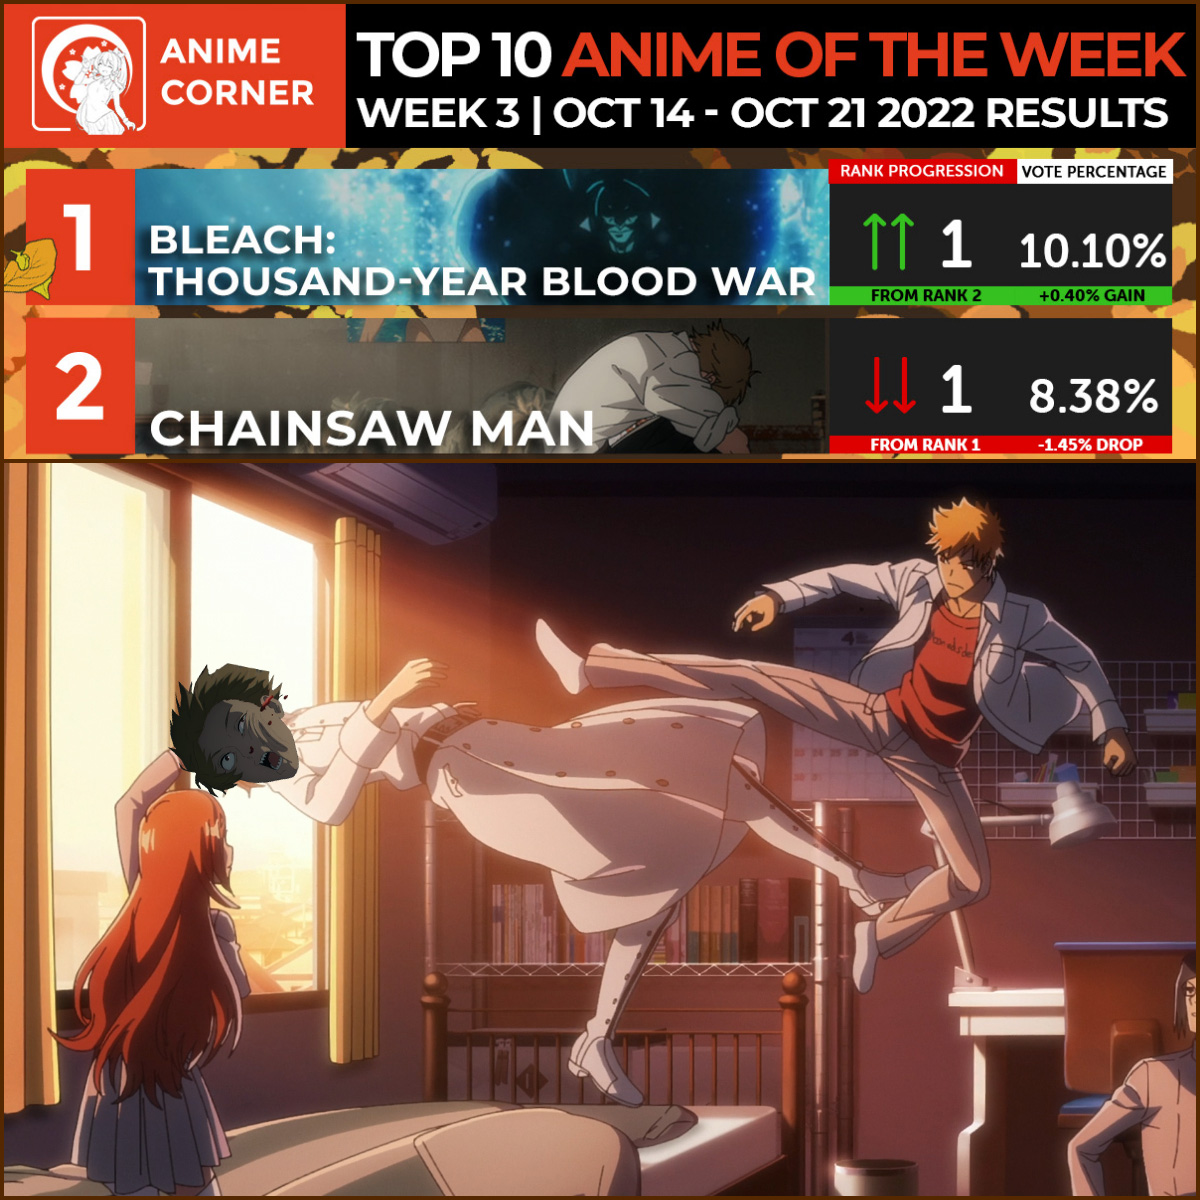 BLEACH: Thousand-Year Blood War Tops Fall 2022 Anime Ranking in Week 3 -  Anime Corner